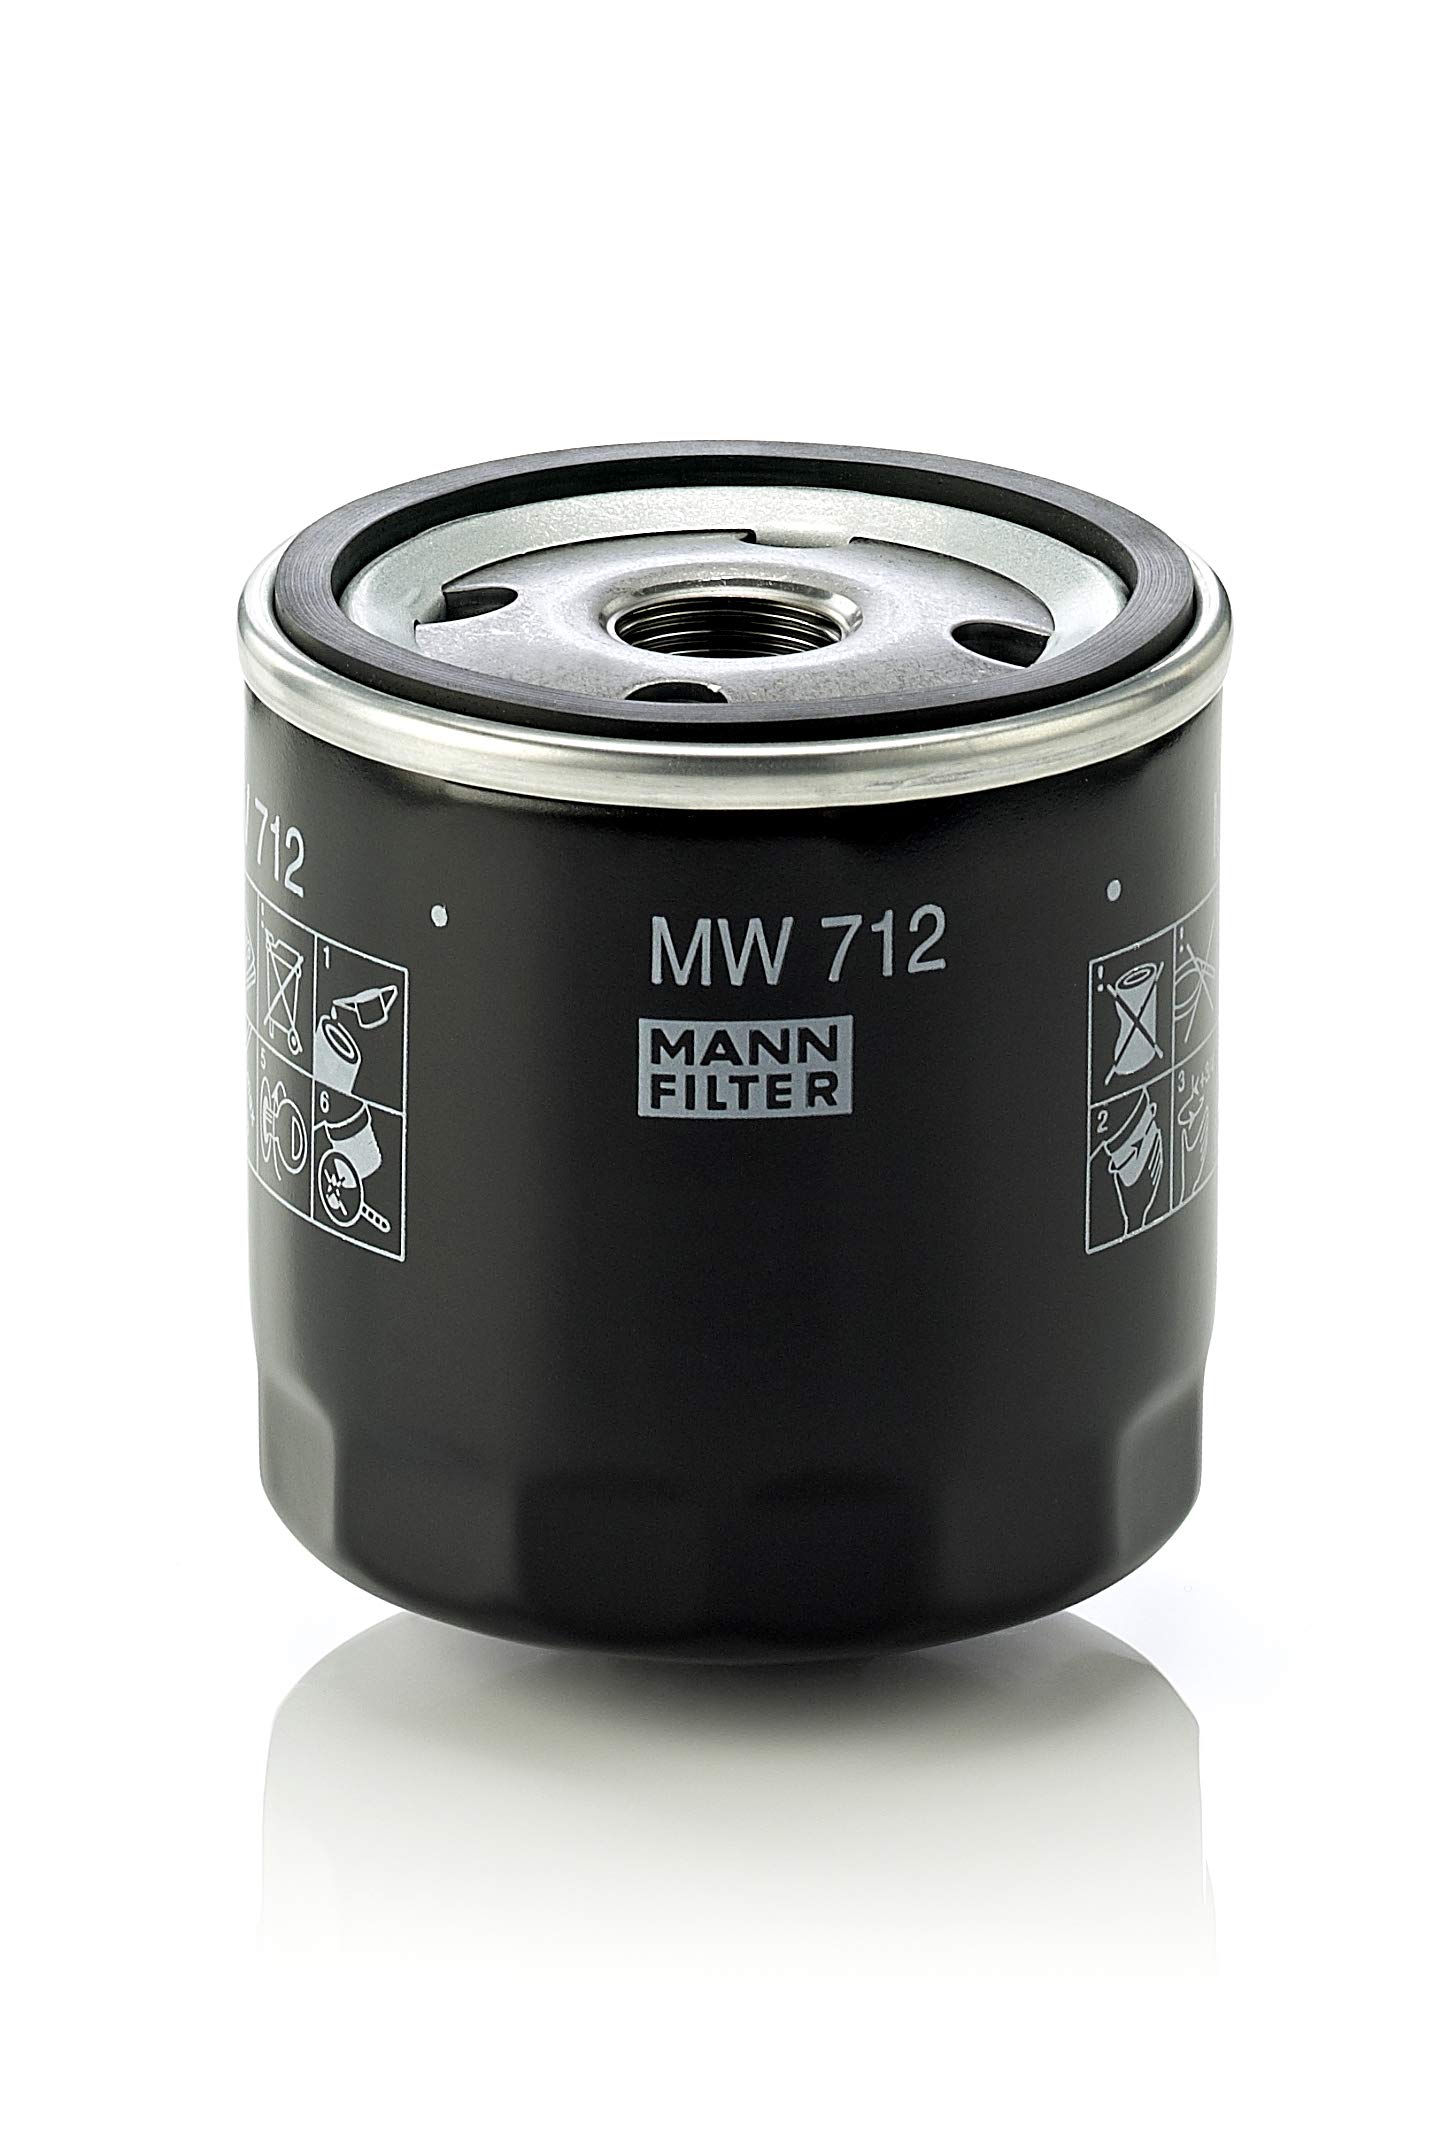 MANN-FILTER MW 712 - Motorrad-Ölwechselfilter Ölfilter – Für Motorräder von MANN-FILTER